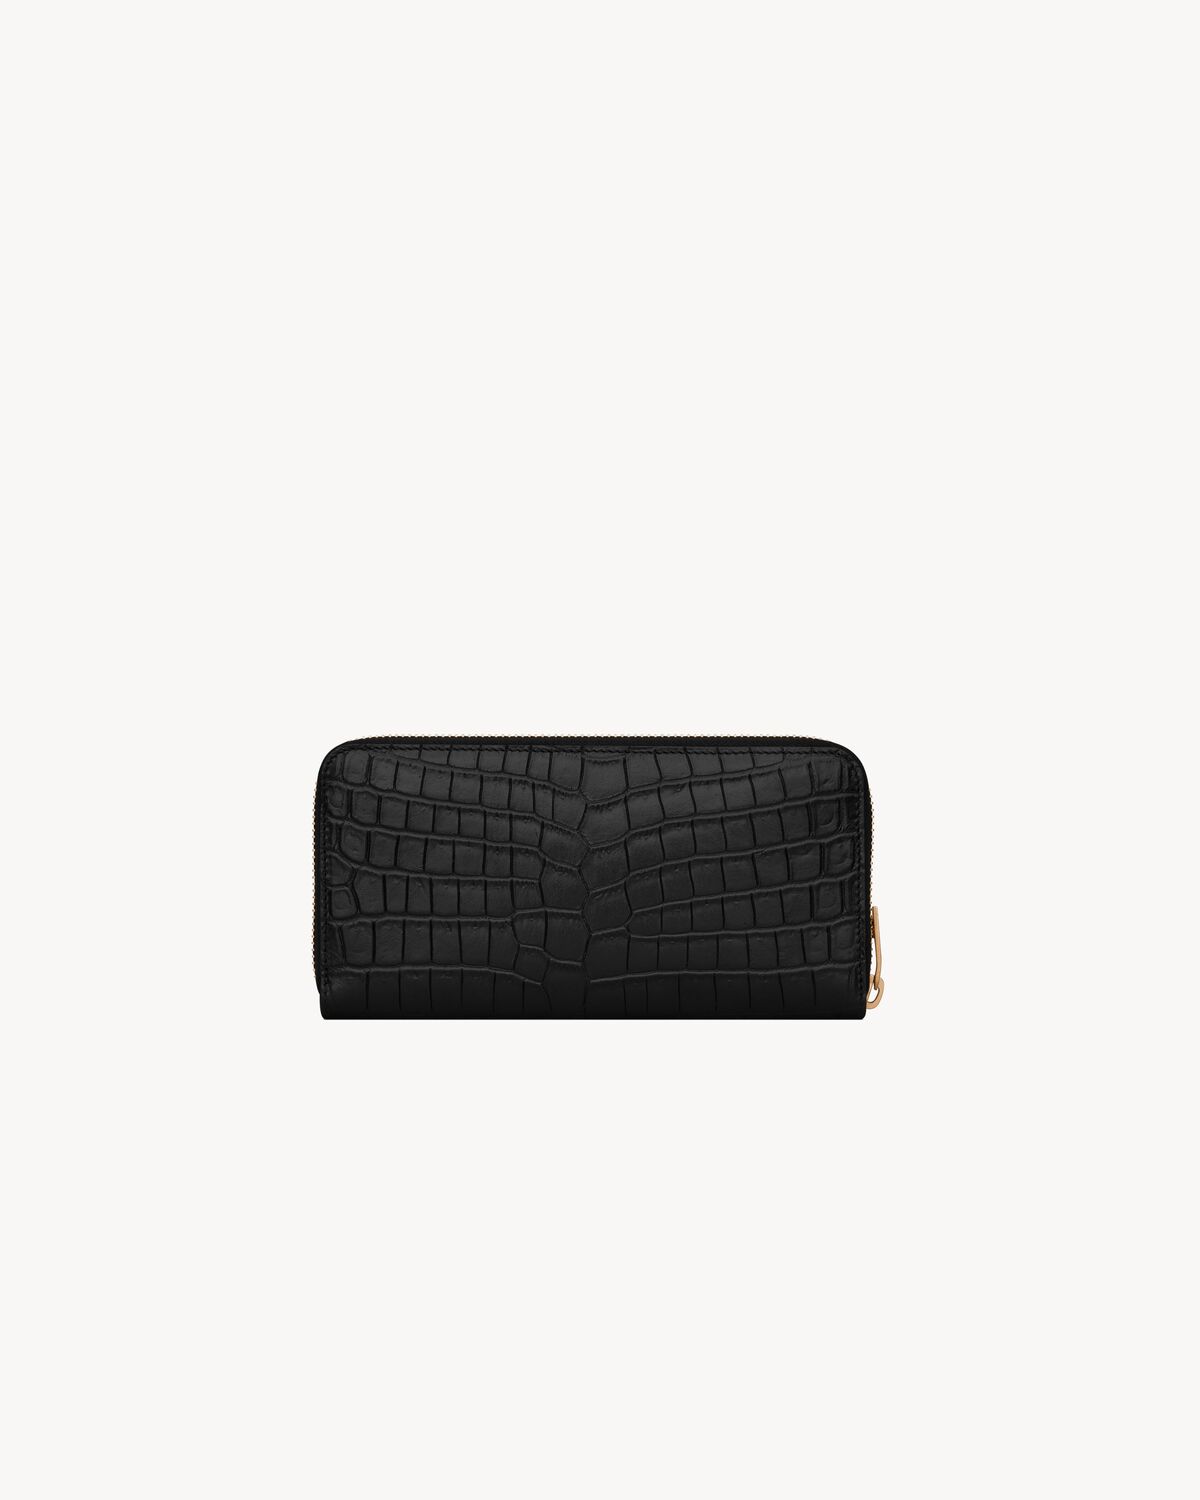 TINY CASSANDRE zip-around wallet in crocodile-embossed matte leather